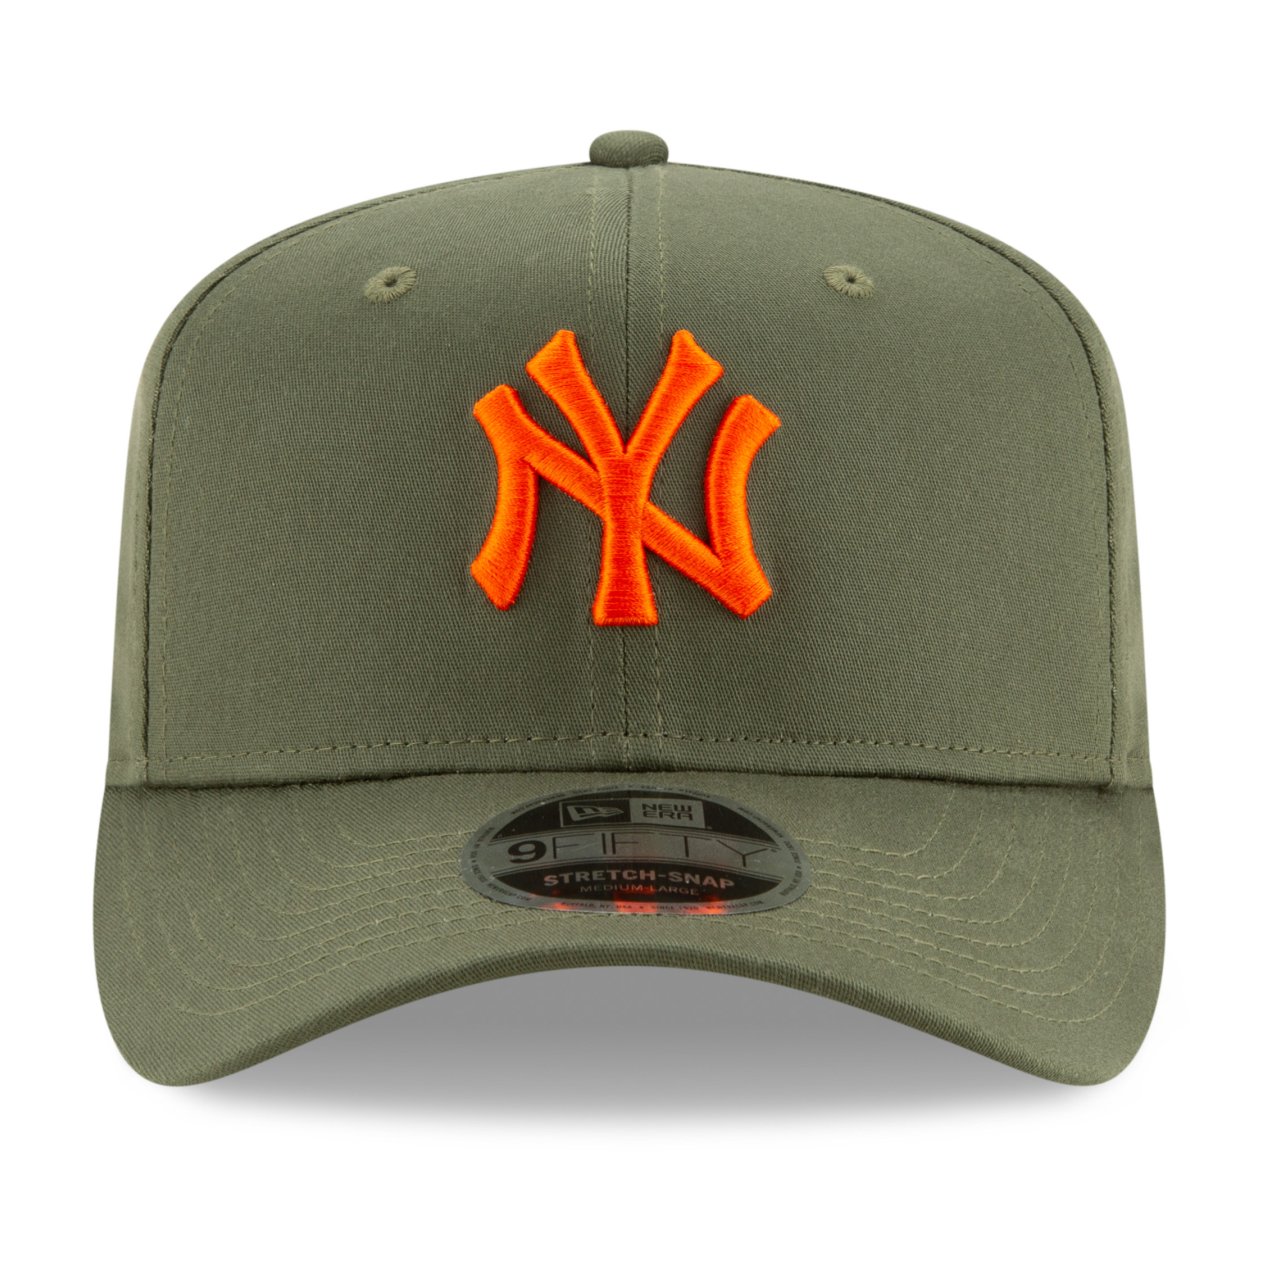 New Era 9Fifty Stretch Snapback Cap - New York Yankees ...